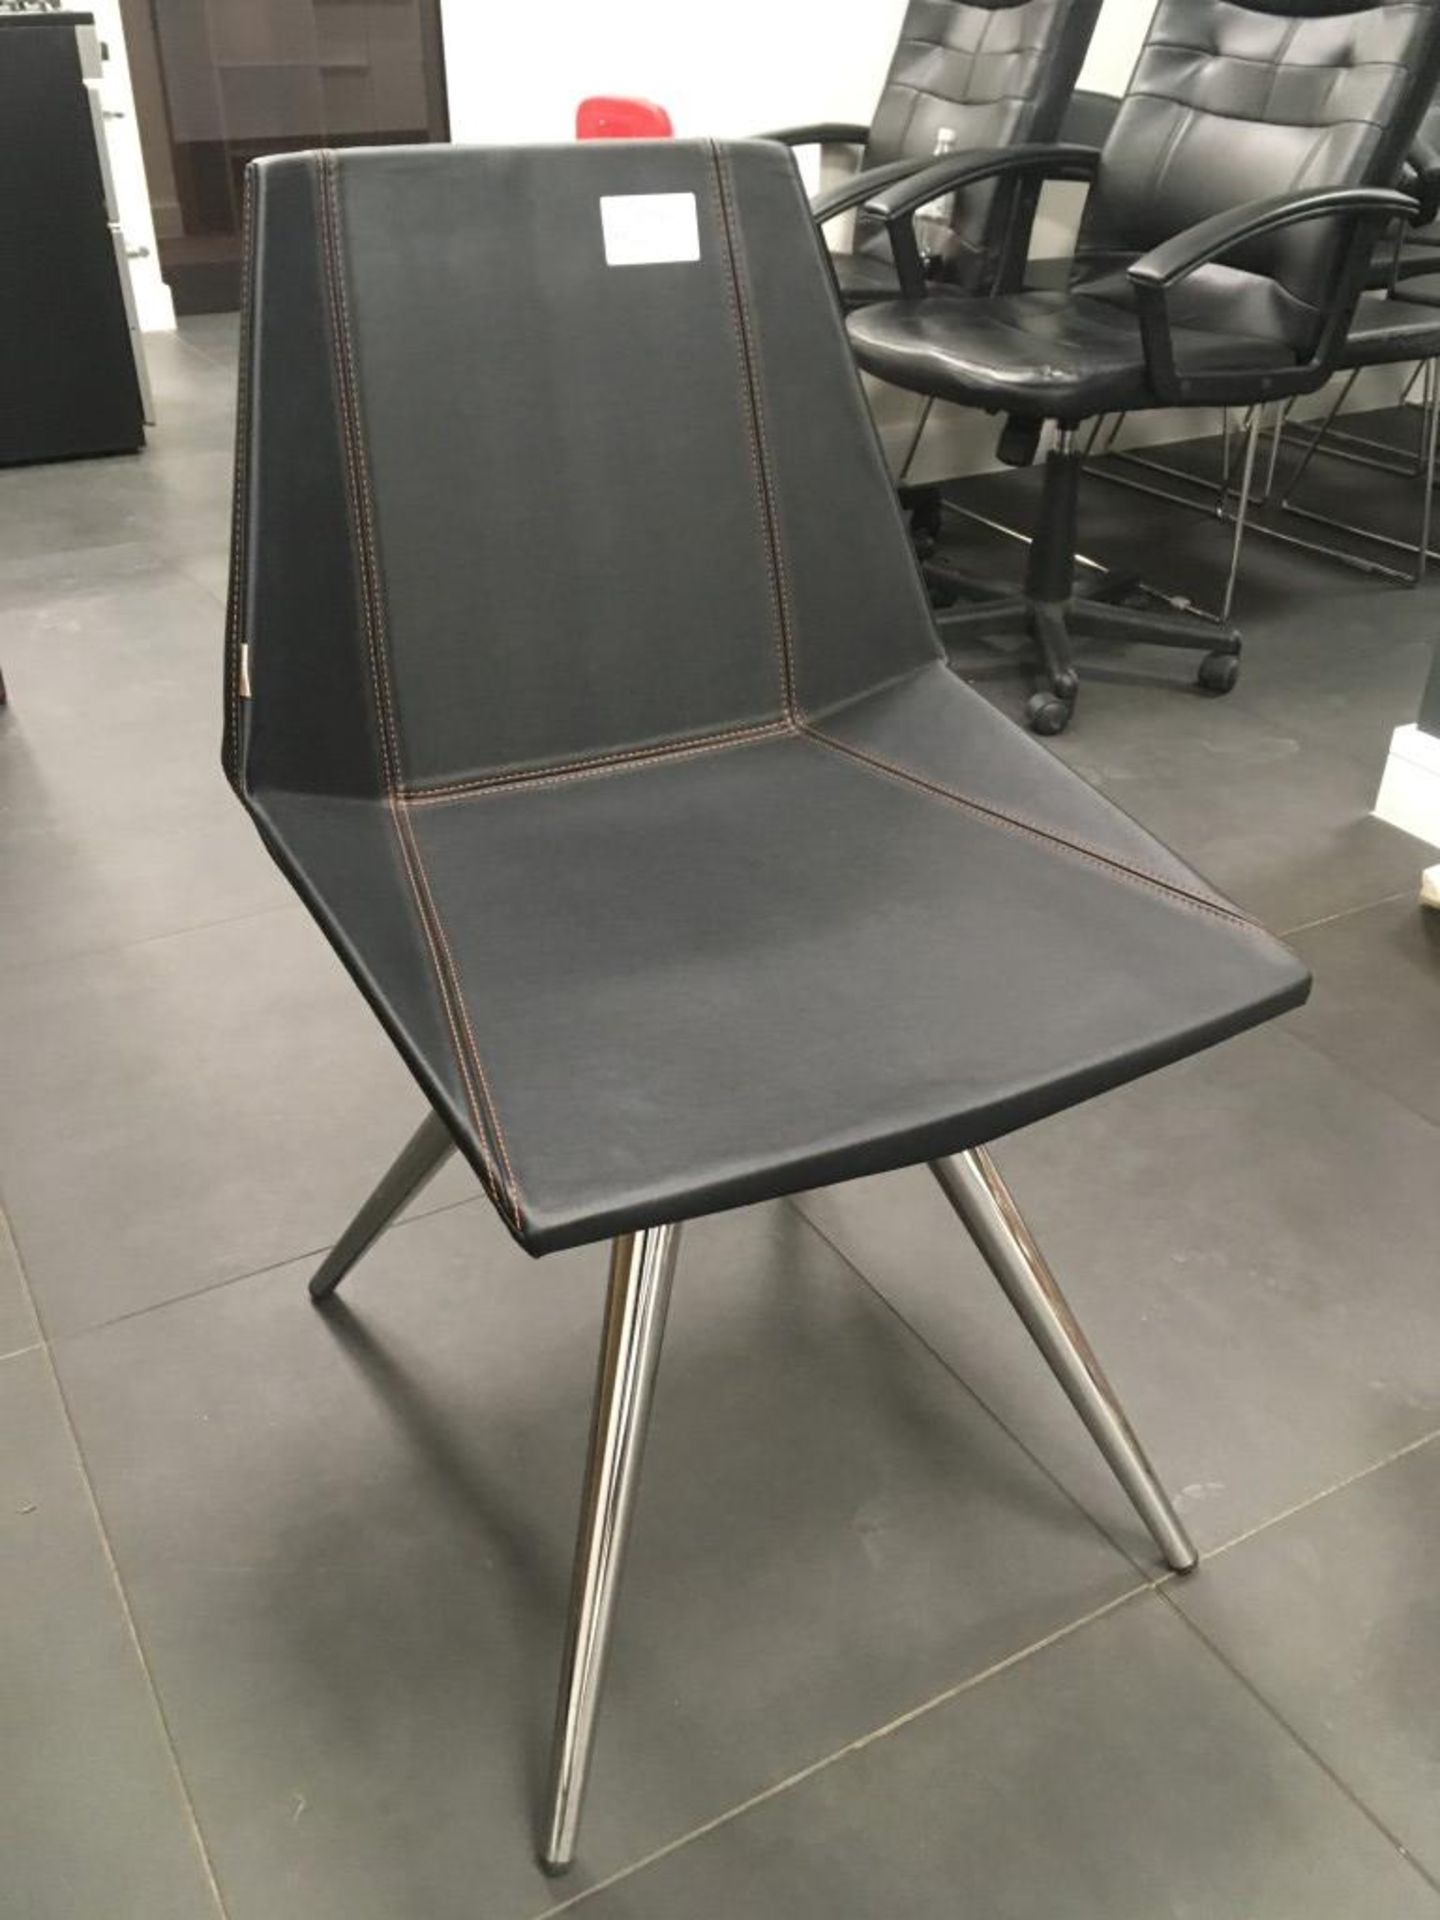 Natisa Abitara Italiano leather chair with chrome legs - Image 2 of 4